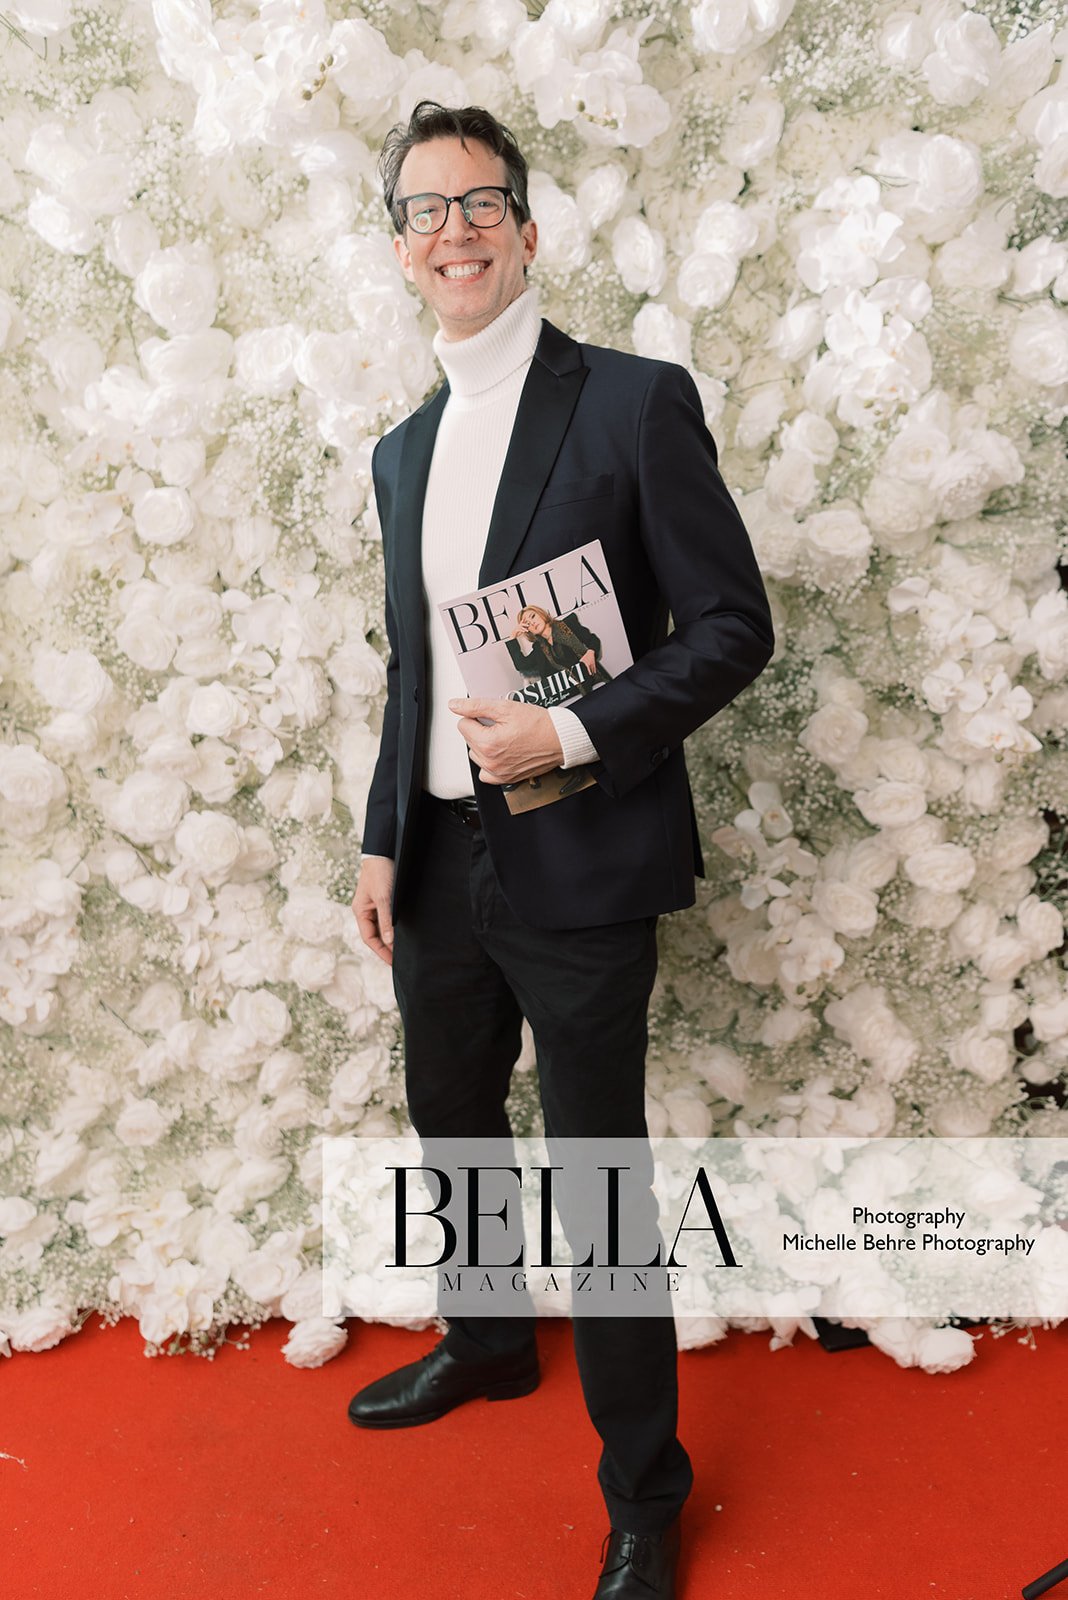 Michelle-Behre-Photography-BELLA-Magazine-Wedding-Event-La-Pulperia-New-York-14.jpg